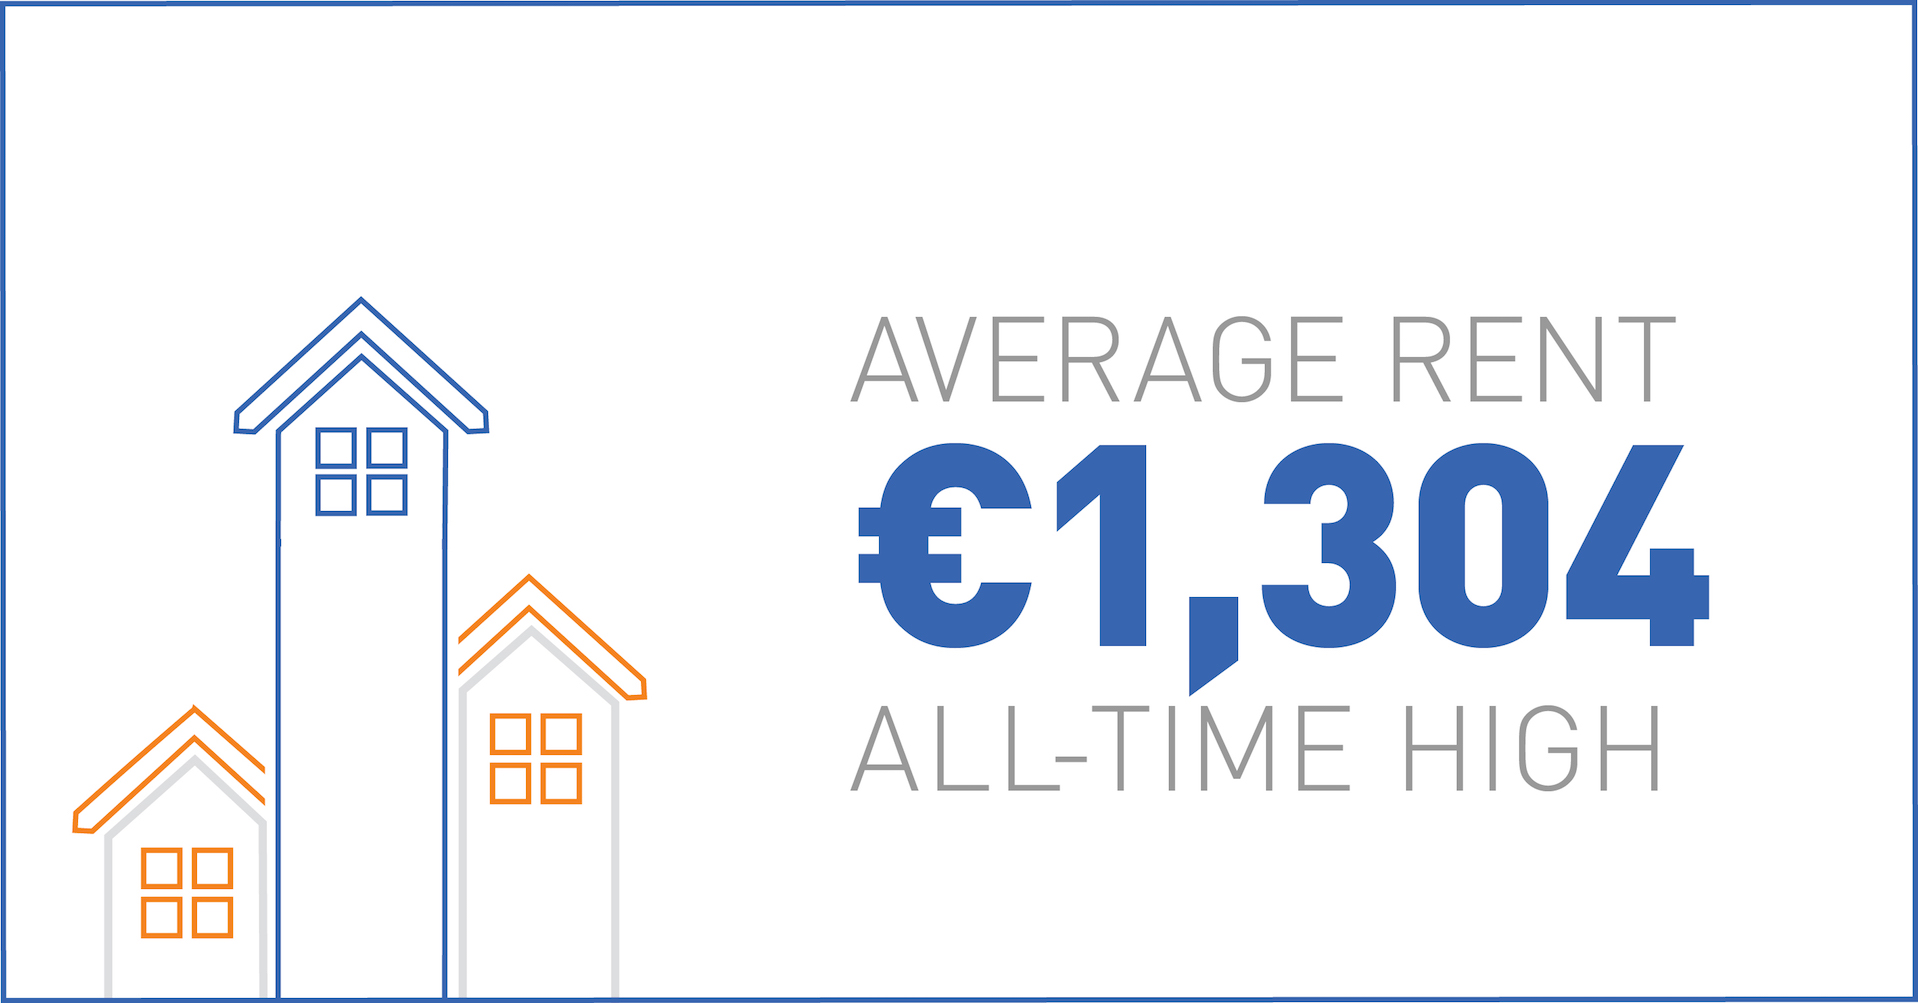 Average rental price - all time high